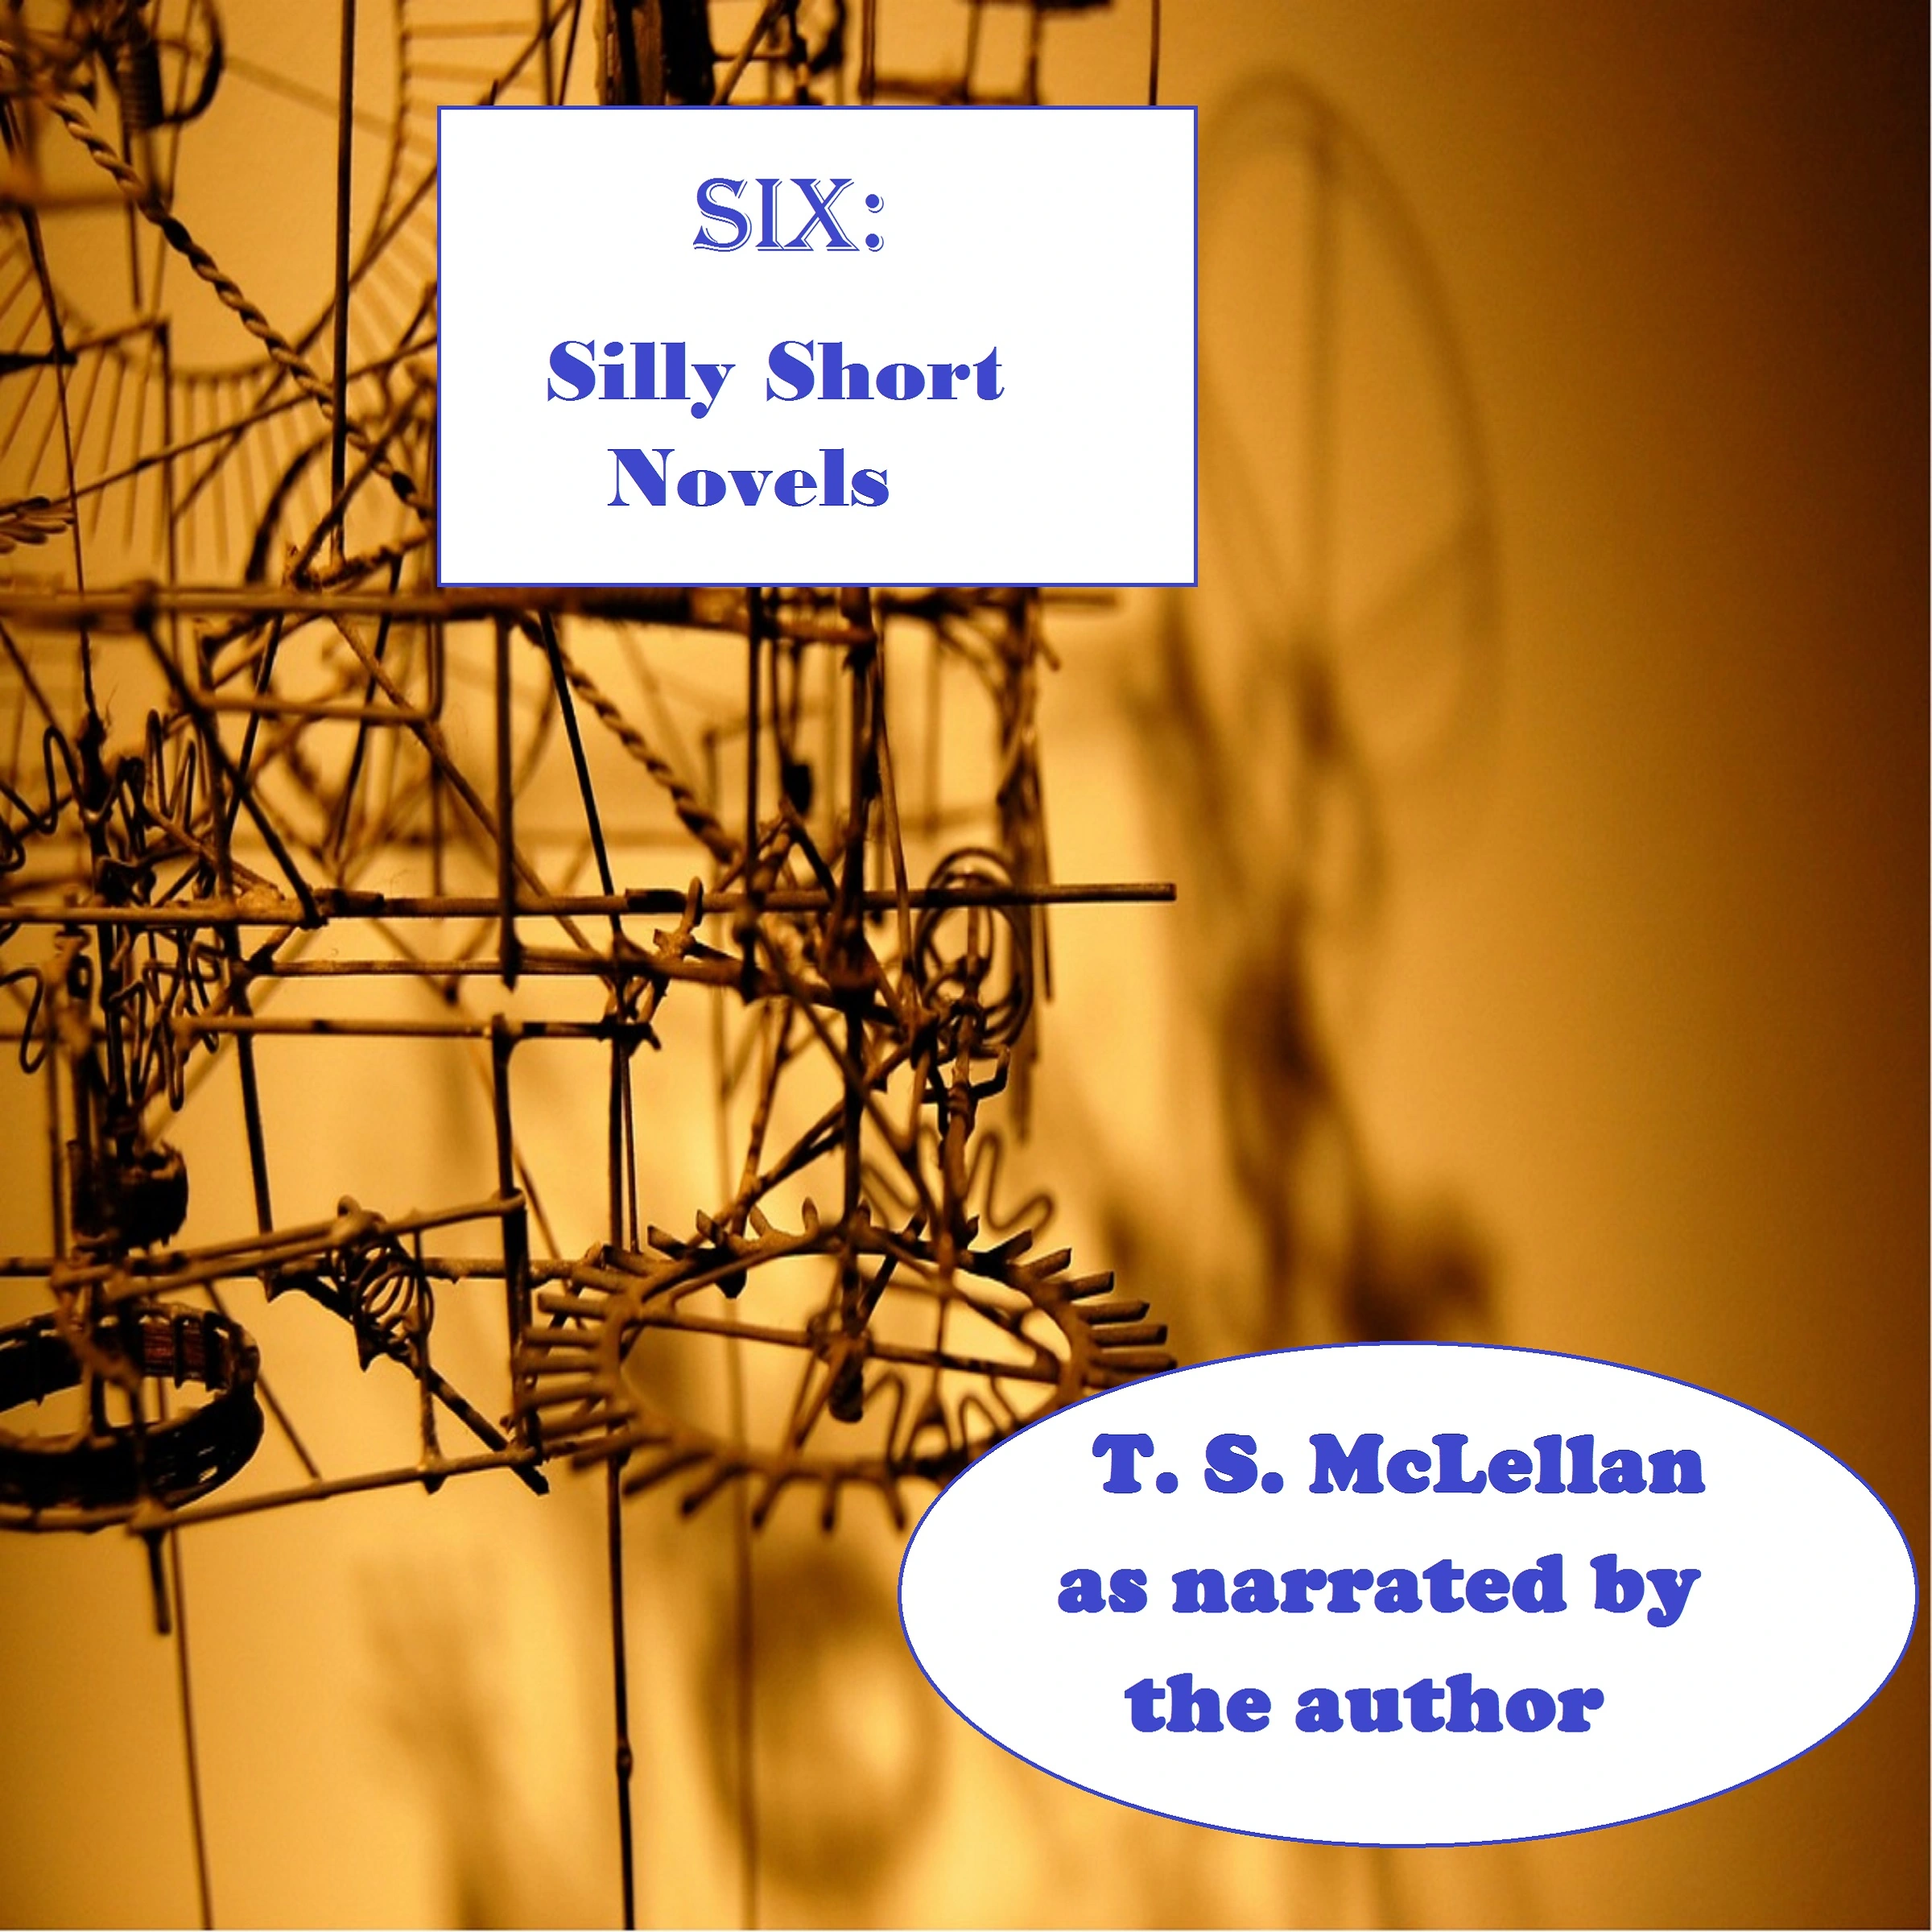 SIX: Silly Short Novels by T. S. McLellan